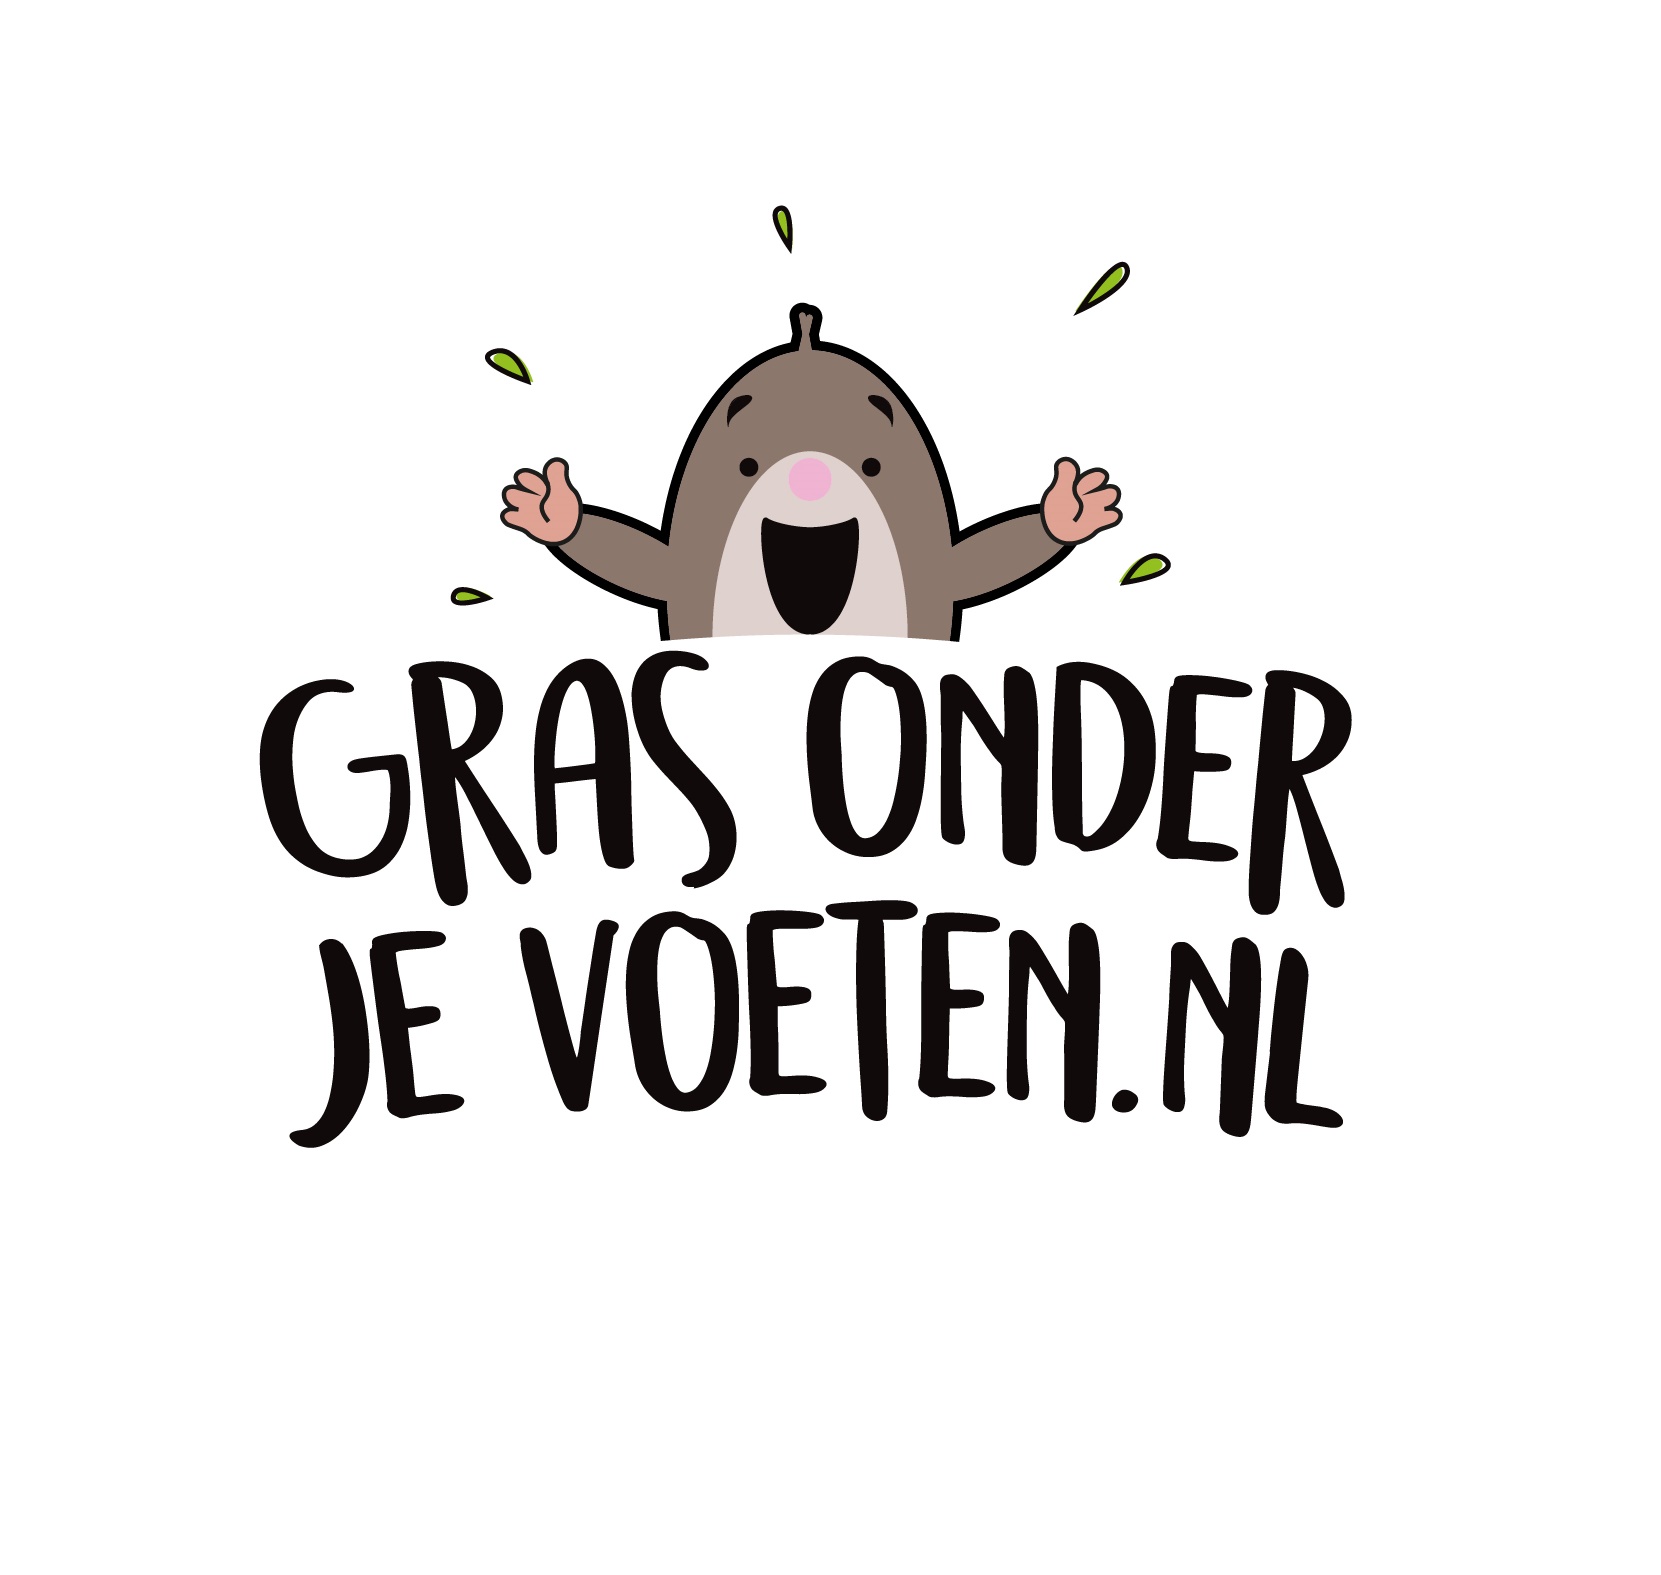 Bezoek Grasonderjevoeten.nl